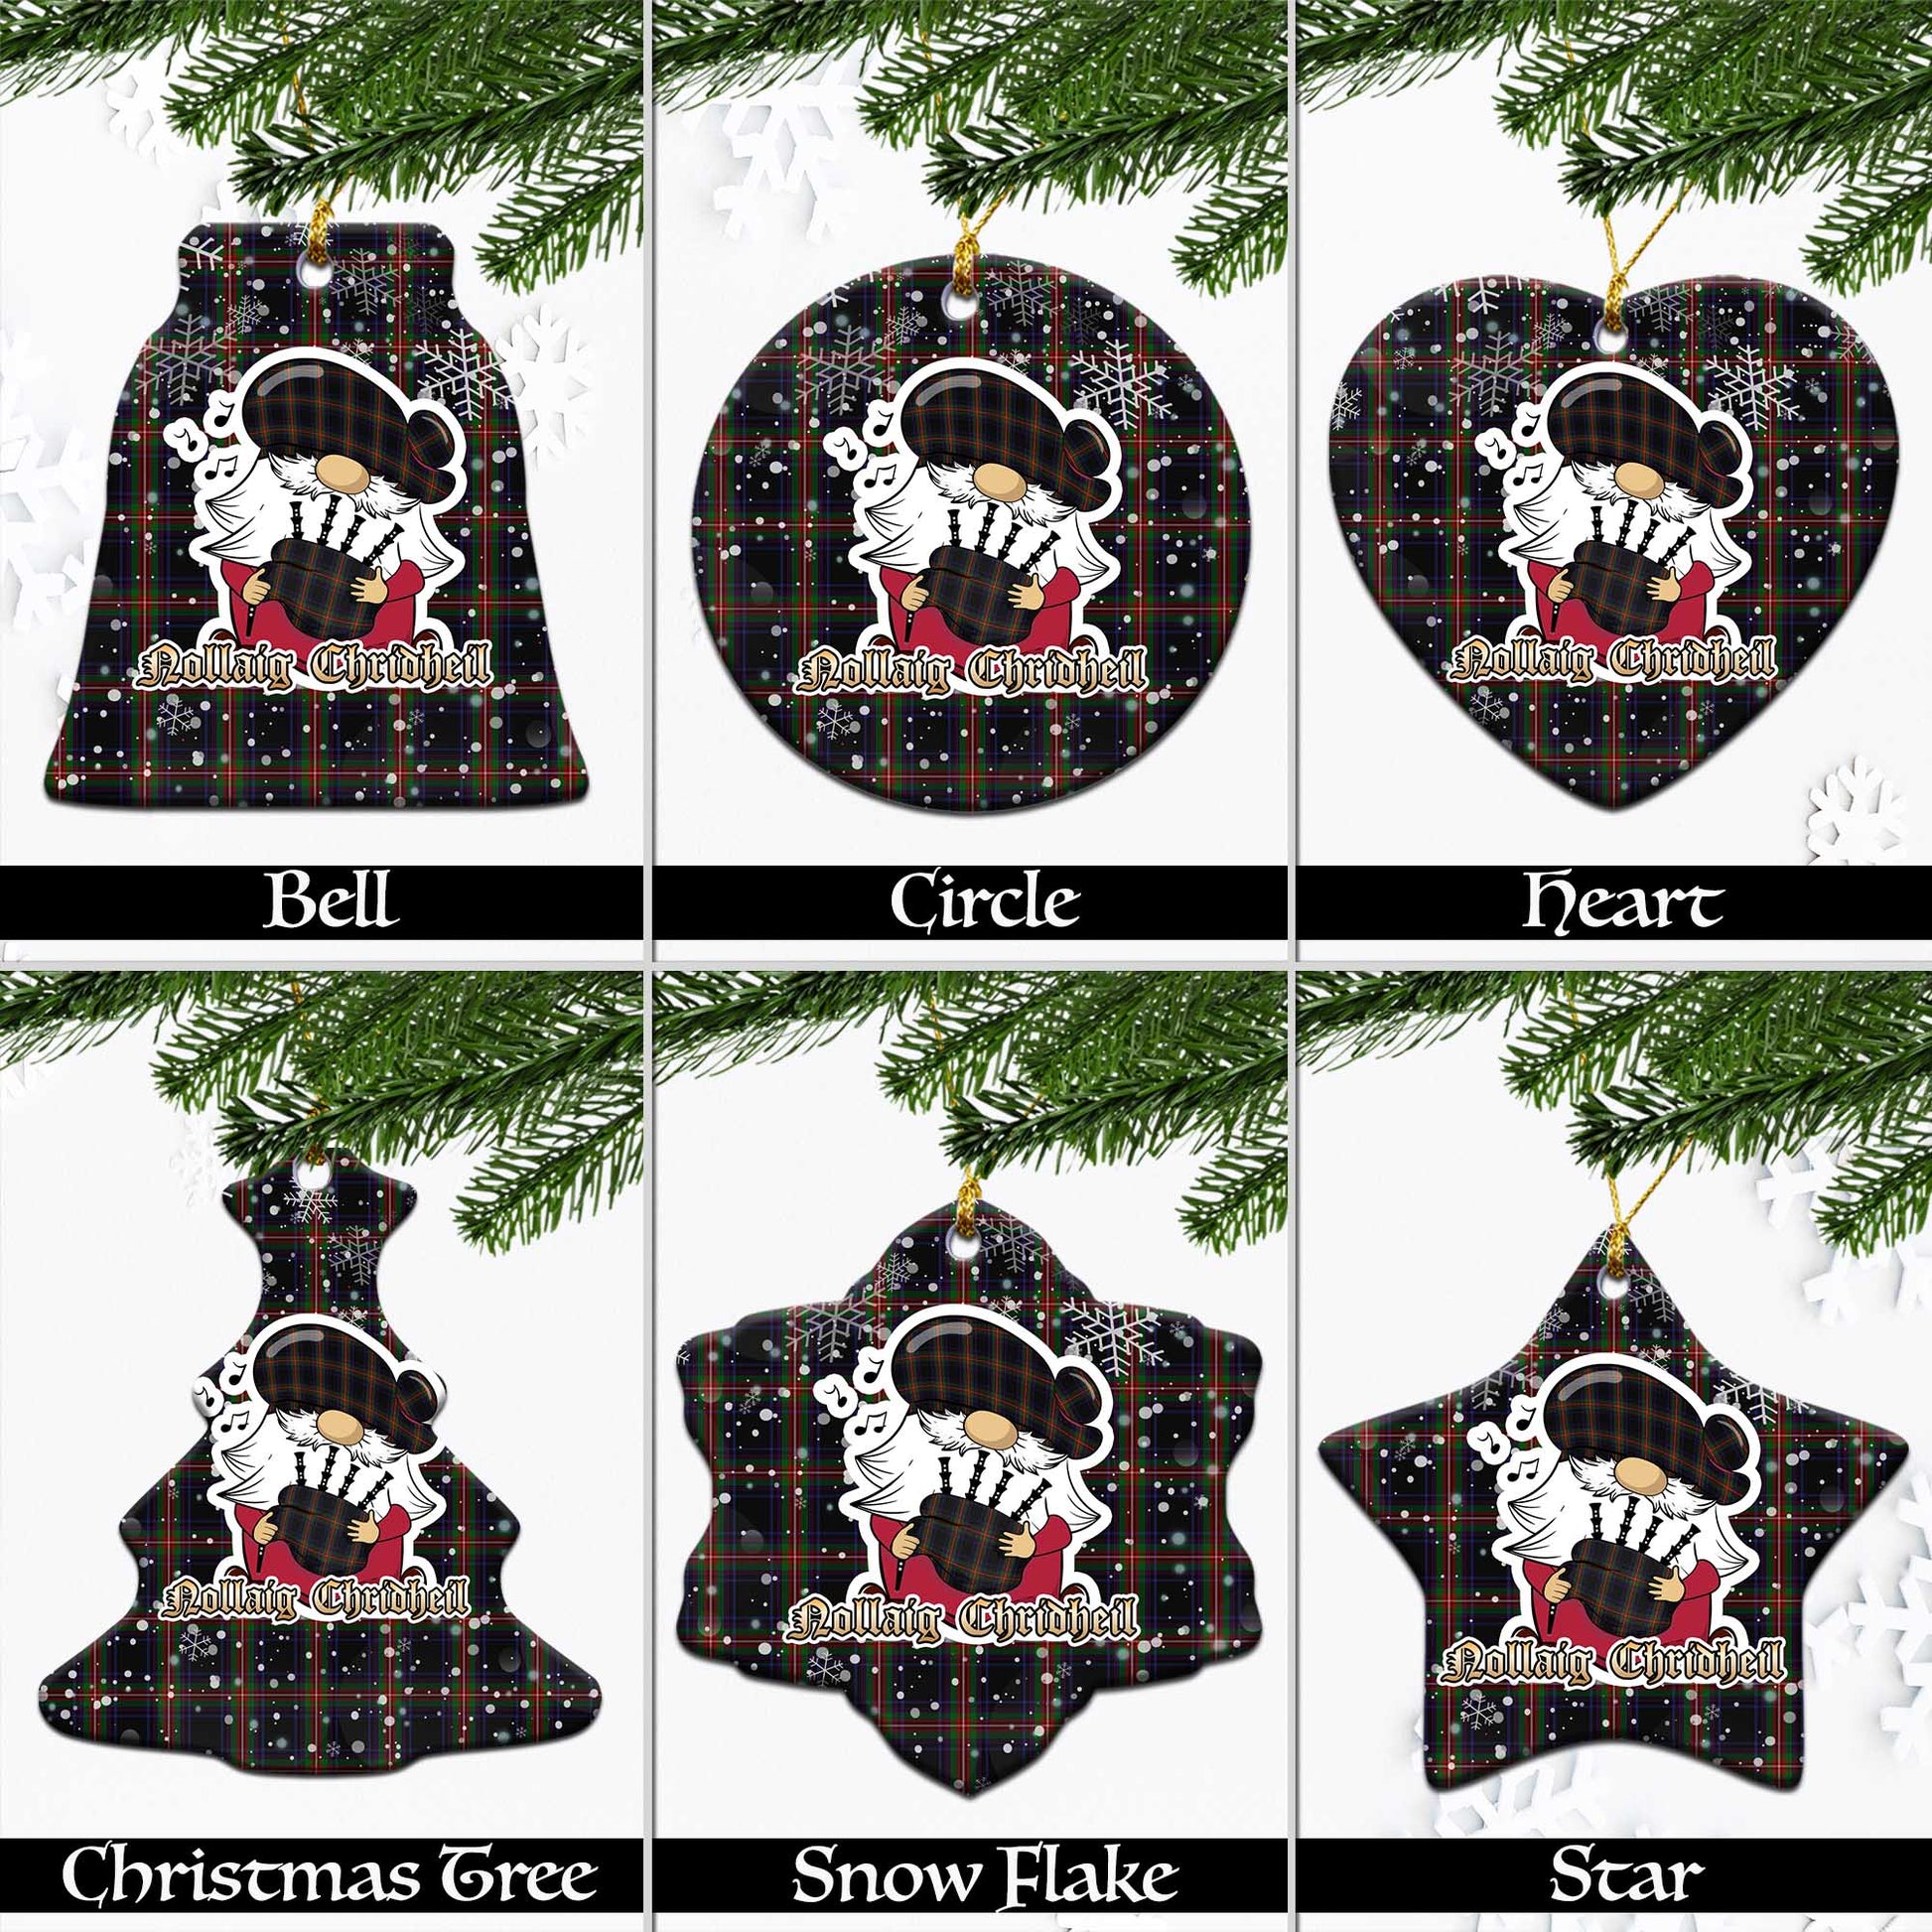 watt-tartan-christmas-ornaments-with-scottish-gnome-playing-bagpipes